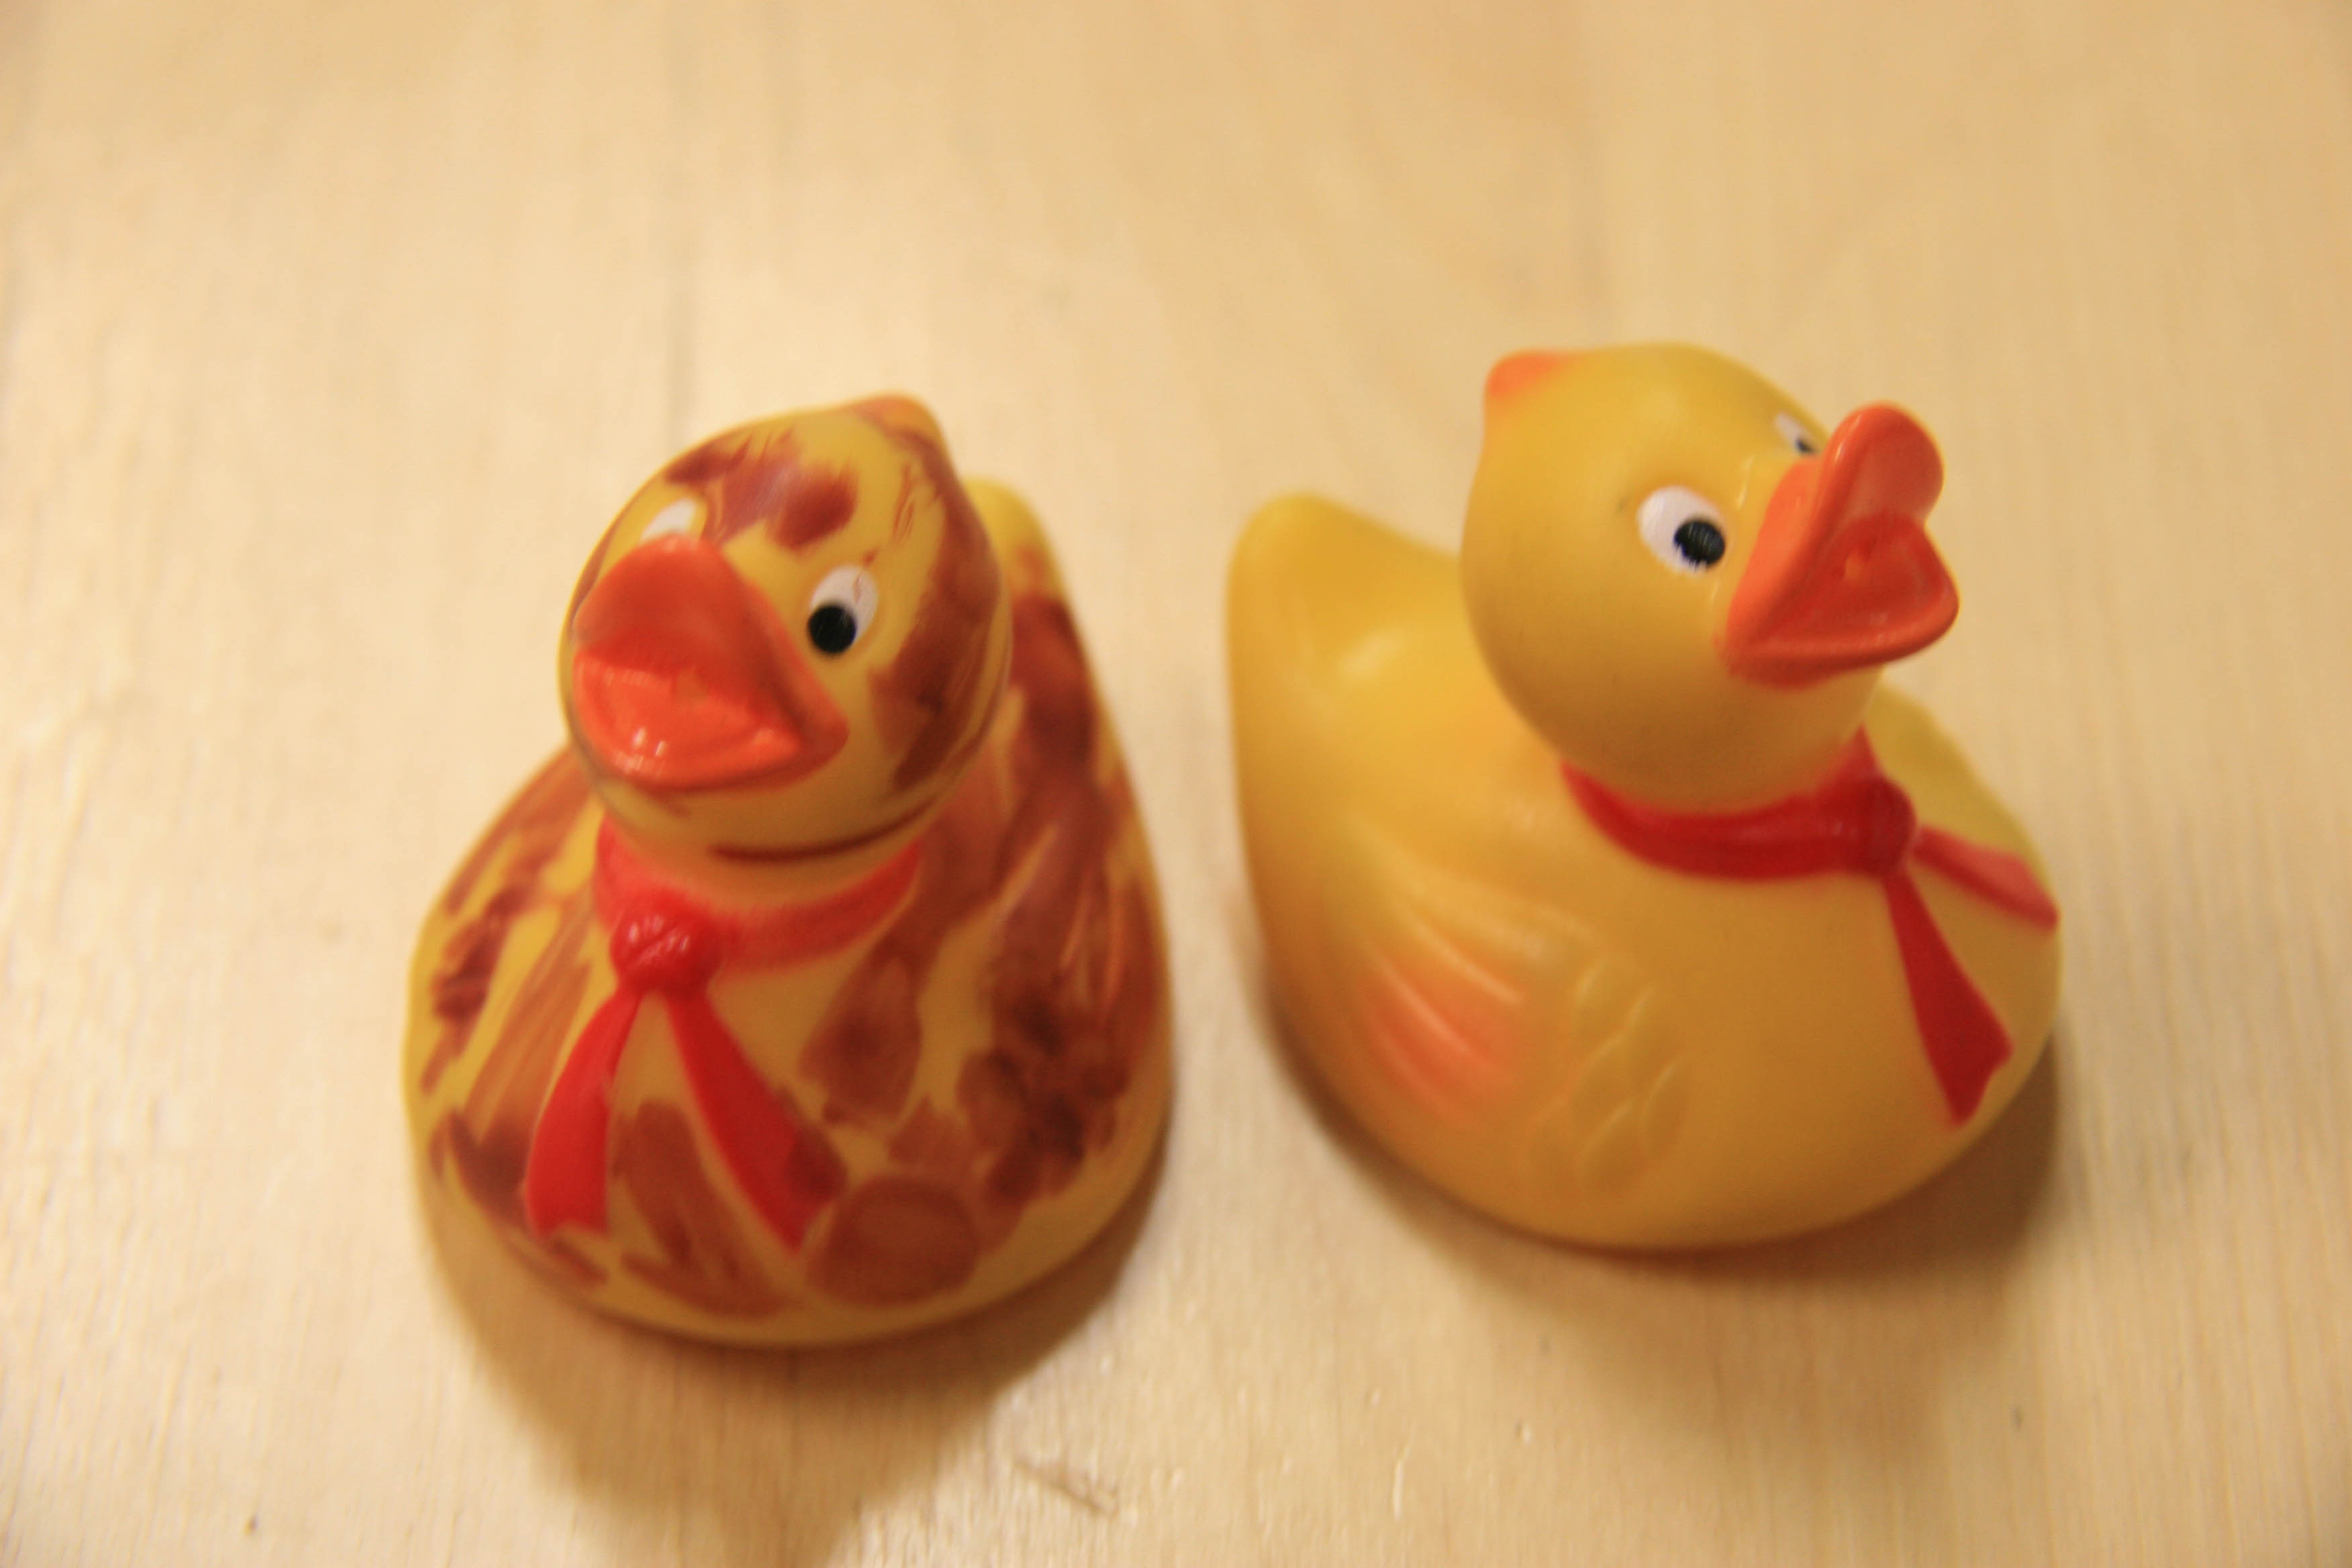 The “pair of ducks”